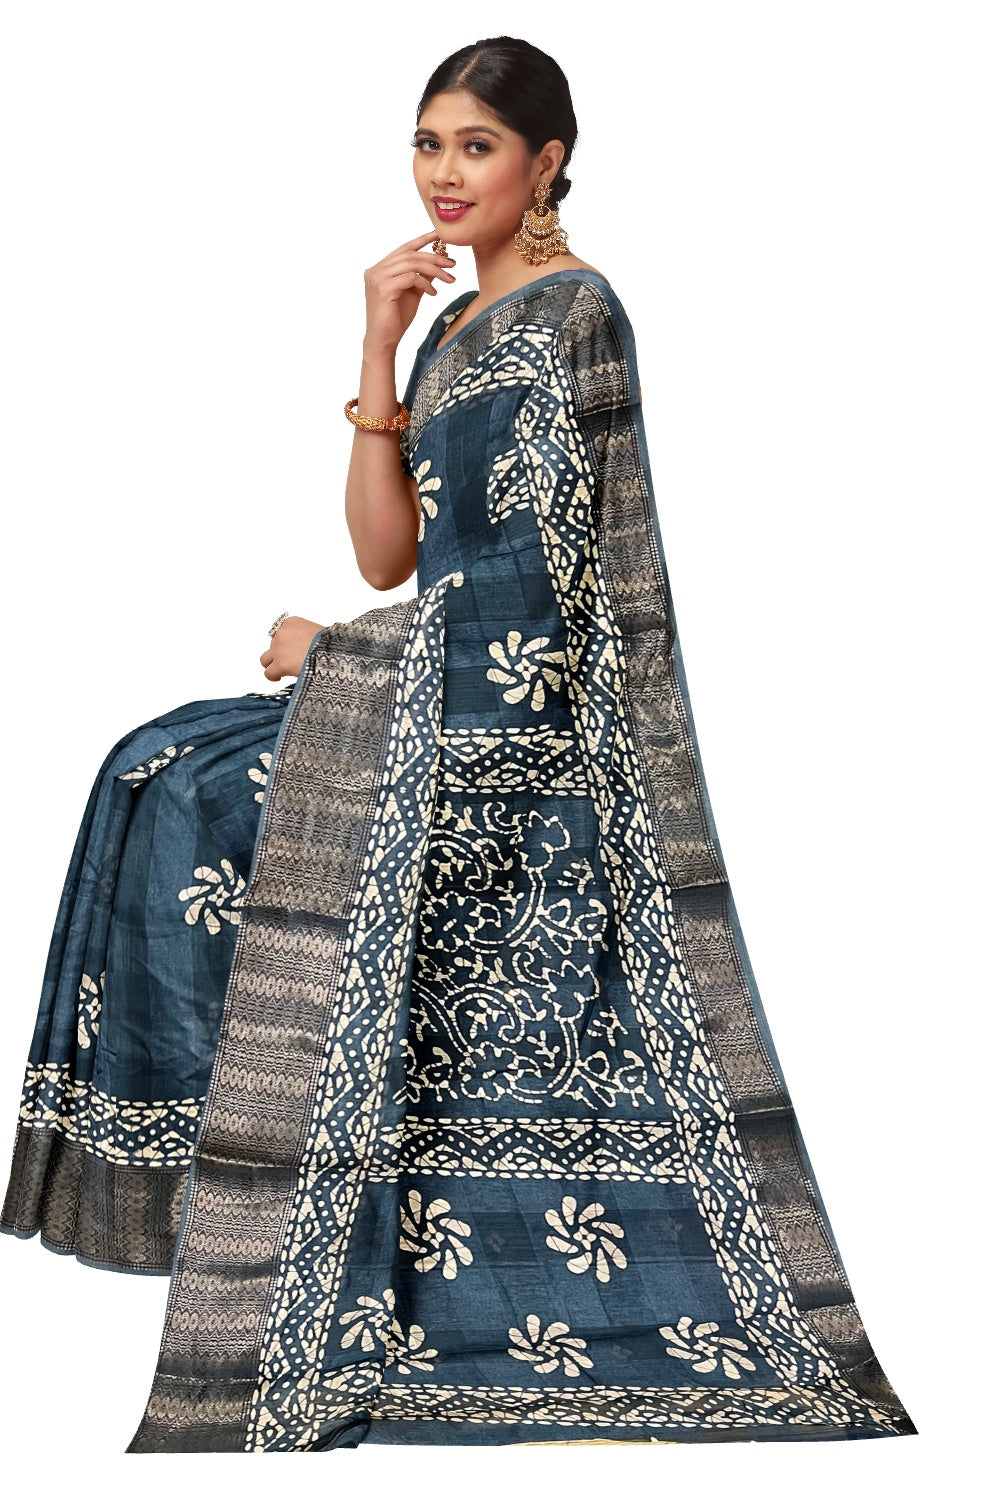 Southloom Greyish Blue Cotton Printed Designer Saree